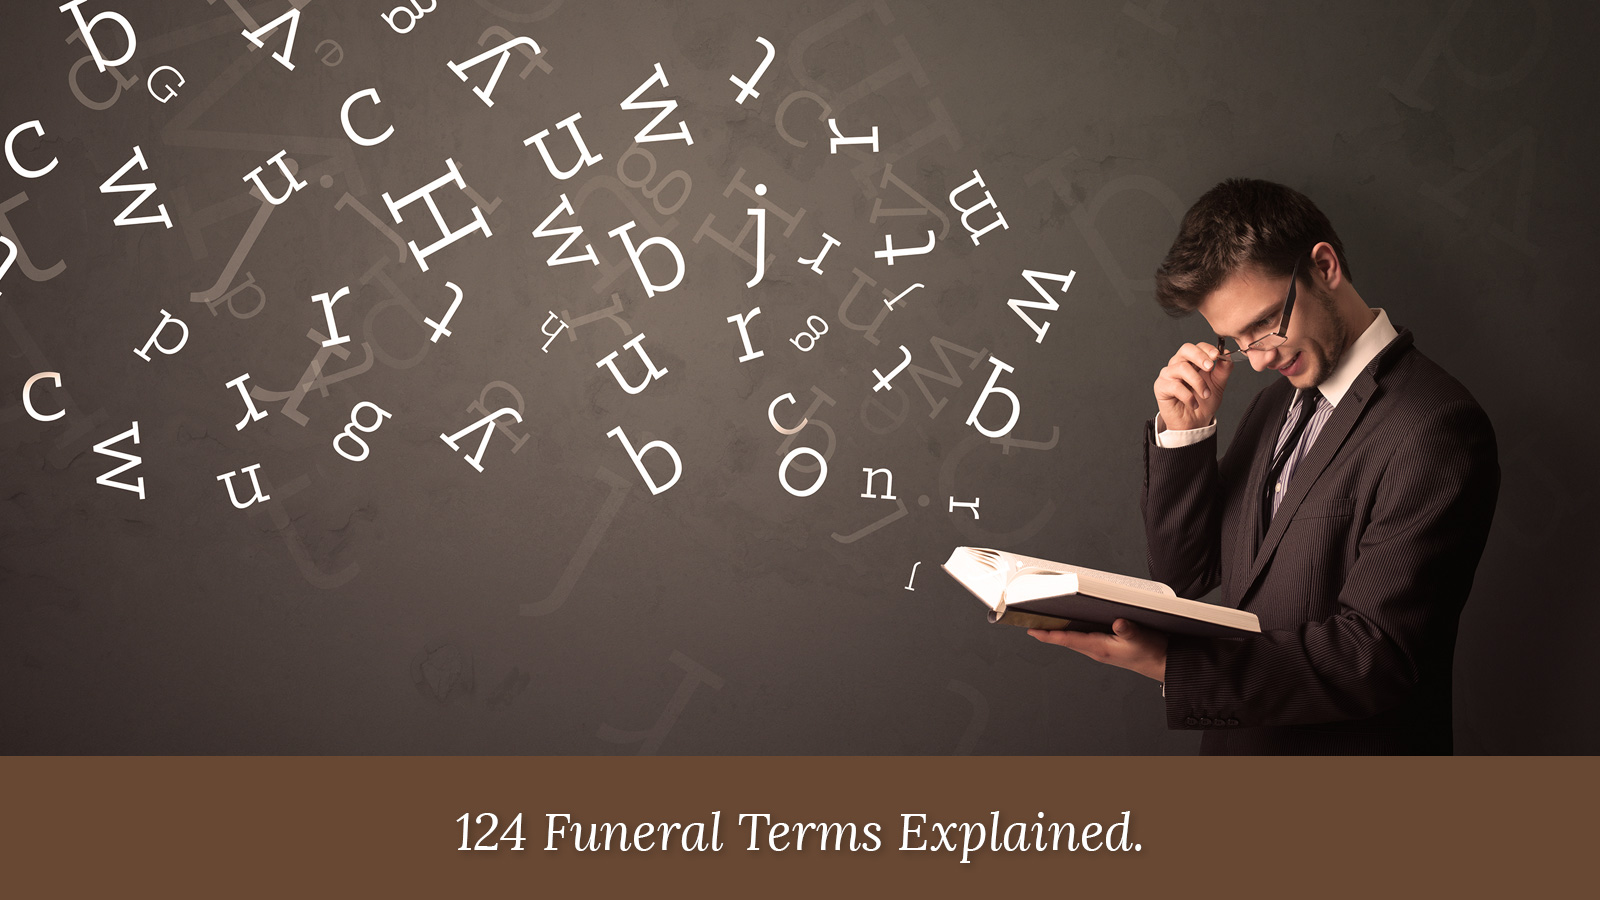 wmp-carousel-2023-funeral-terms2